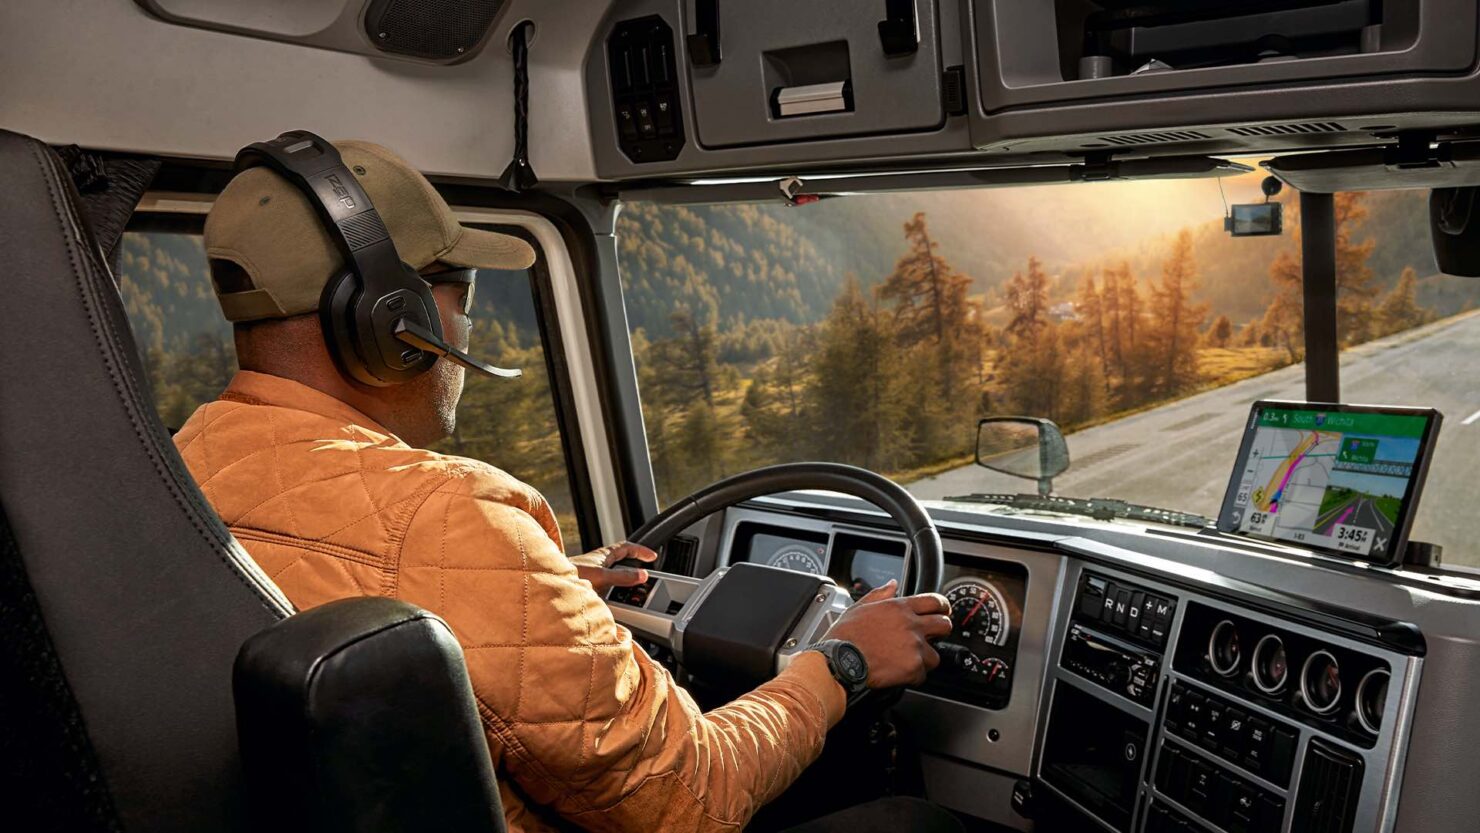 Garmin announces new dezl headsets built for truck drivers